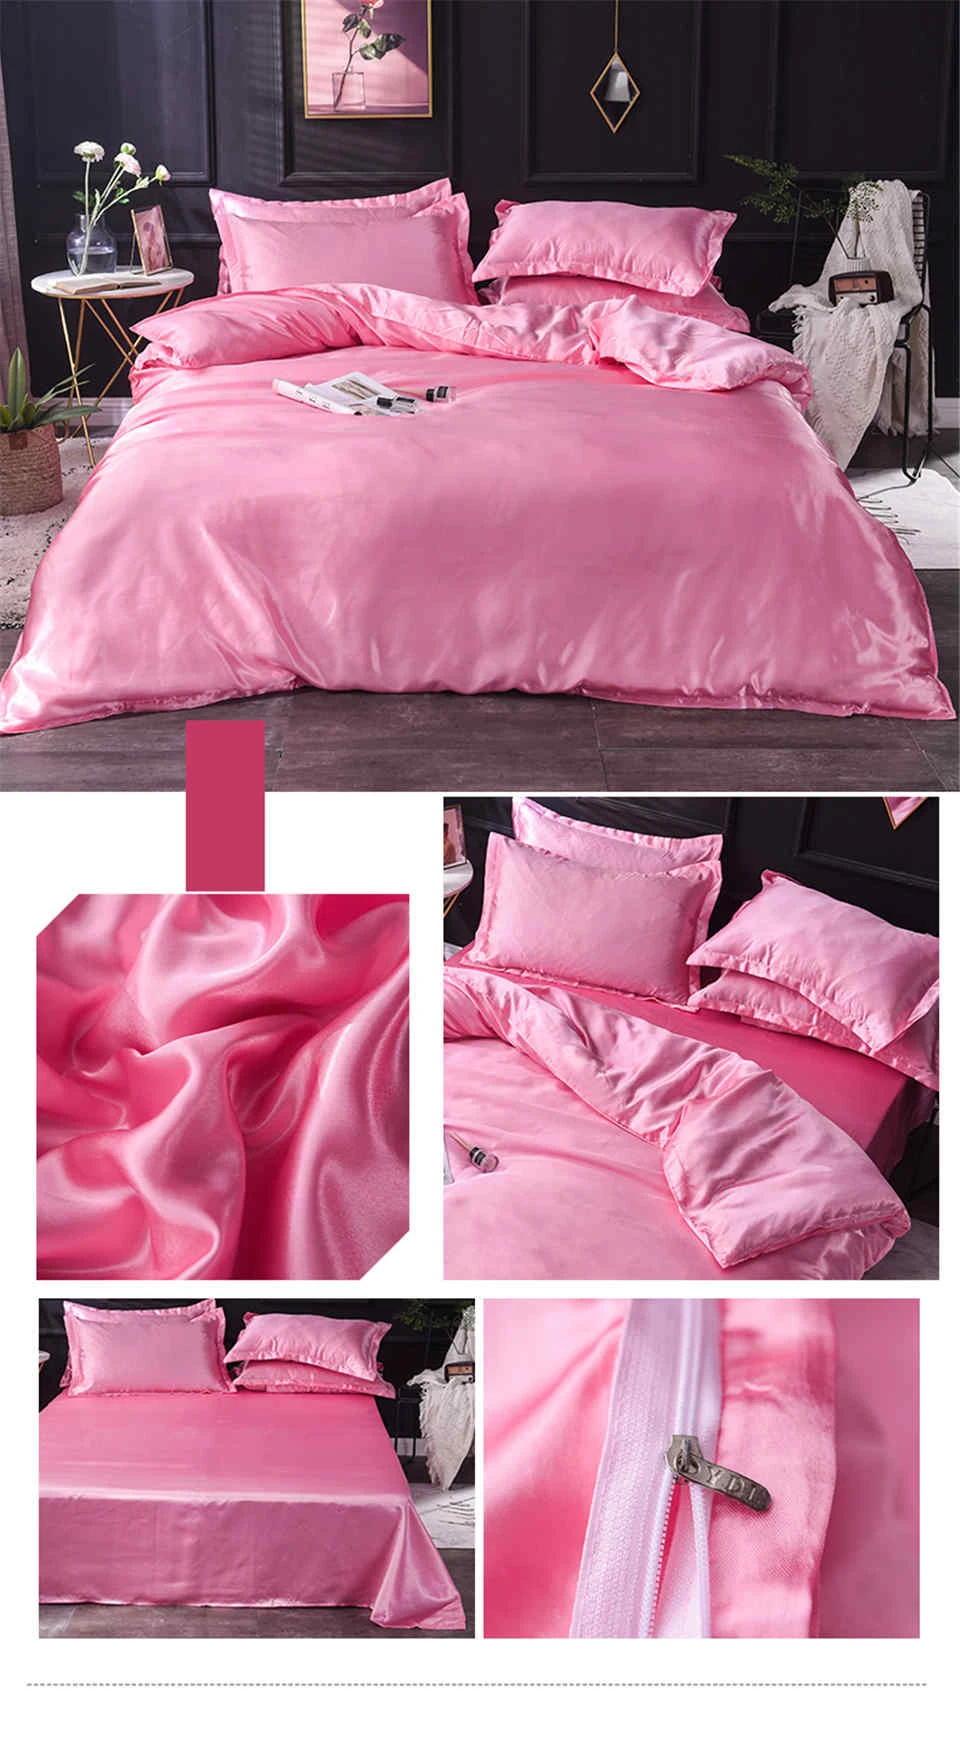 Slowdream Luxury Purple Stain Silk Bedding Set Silky Queen King Bed Set Bedclothe Duvet Cover Queen King Sheet Pillowcase